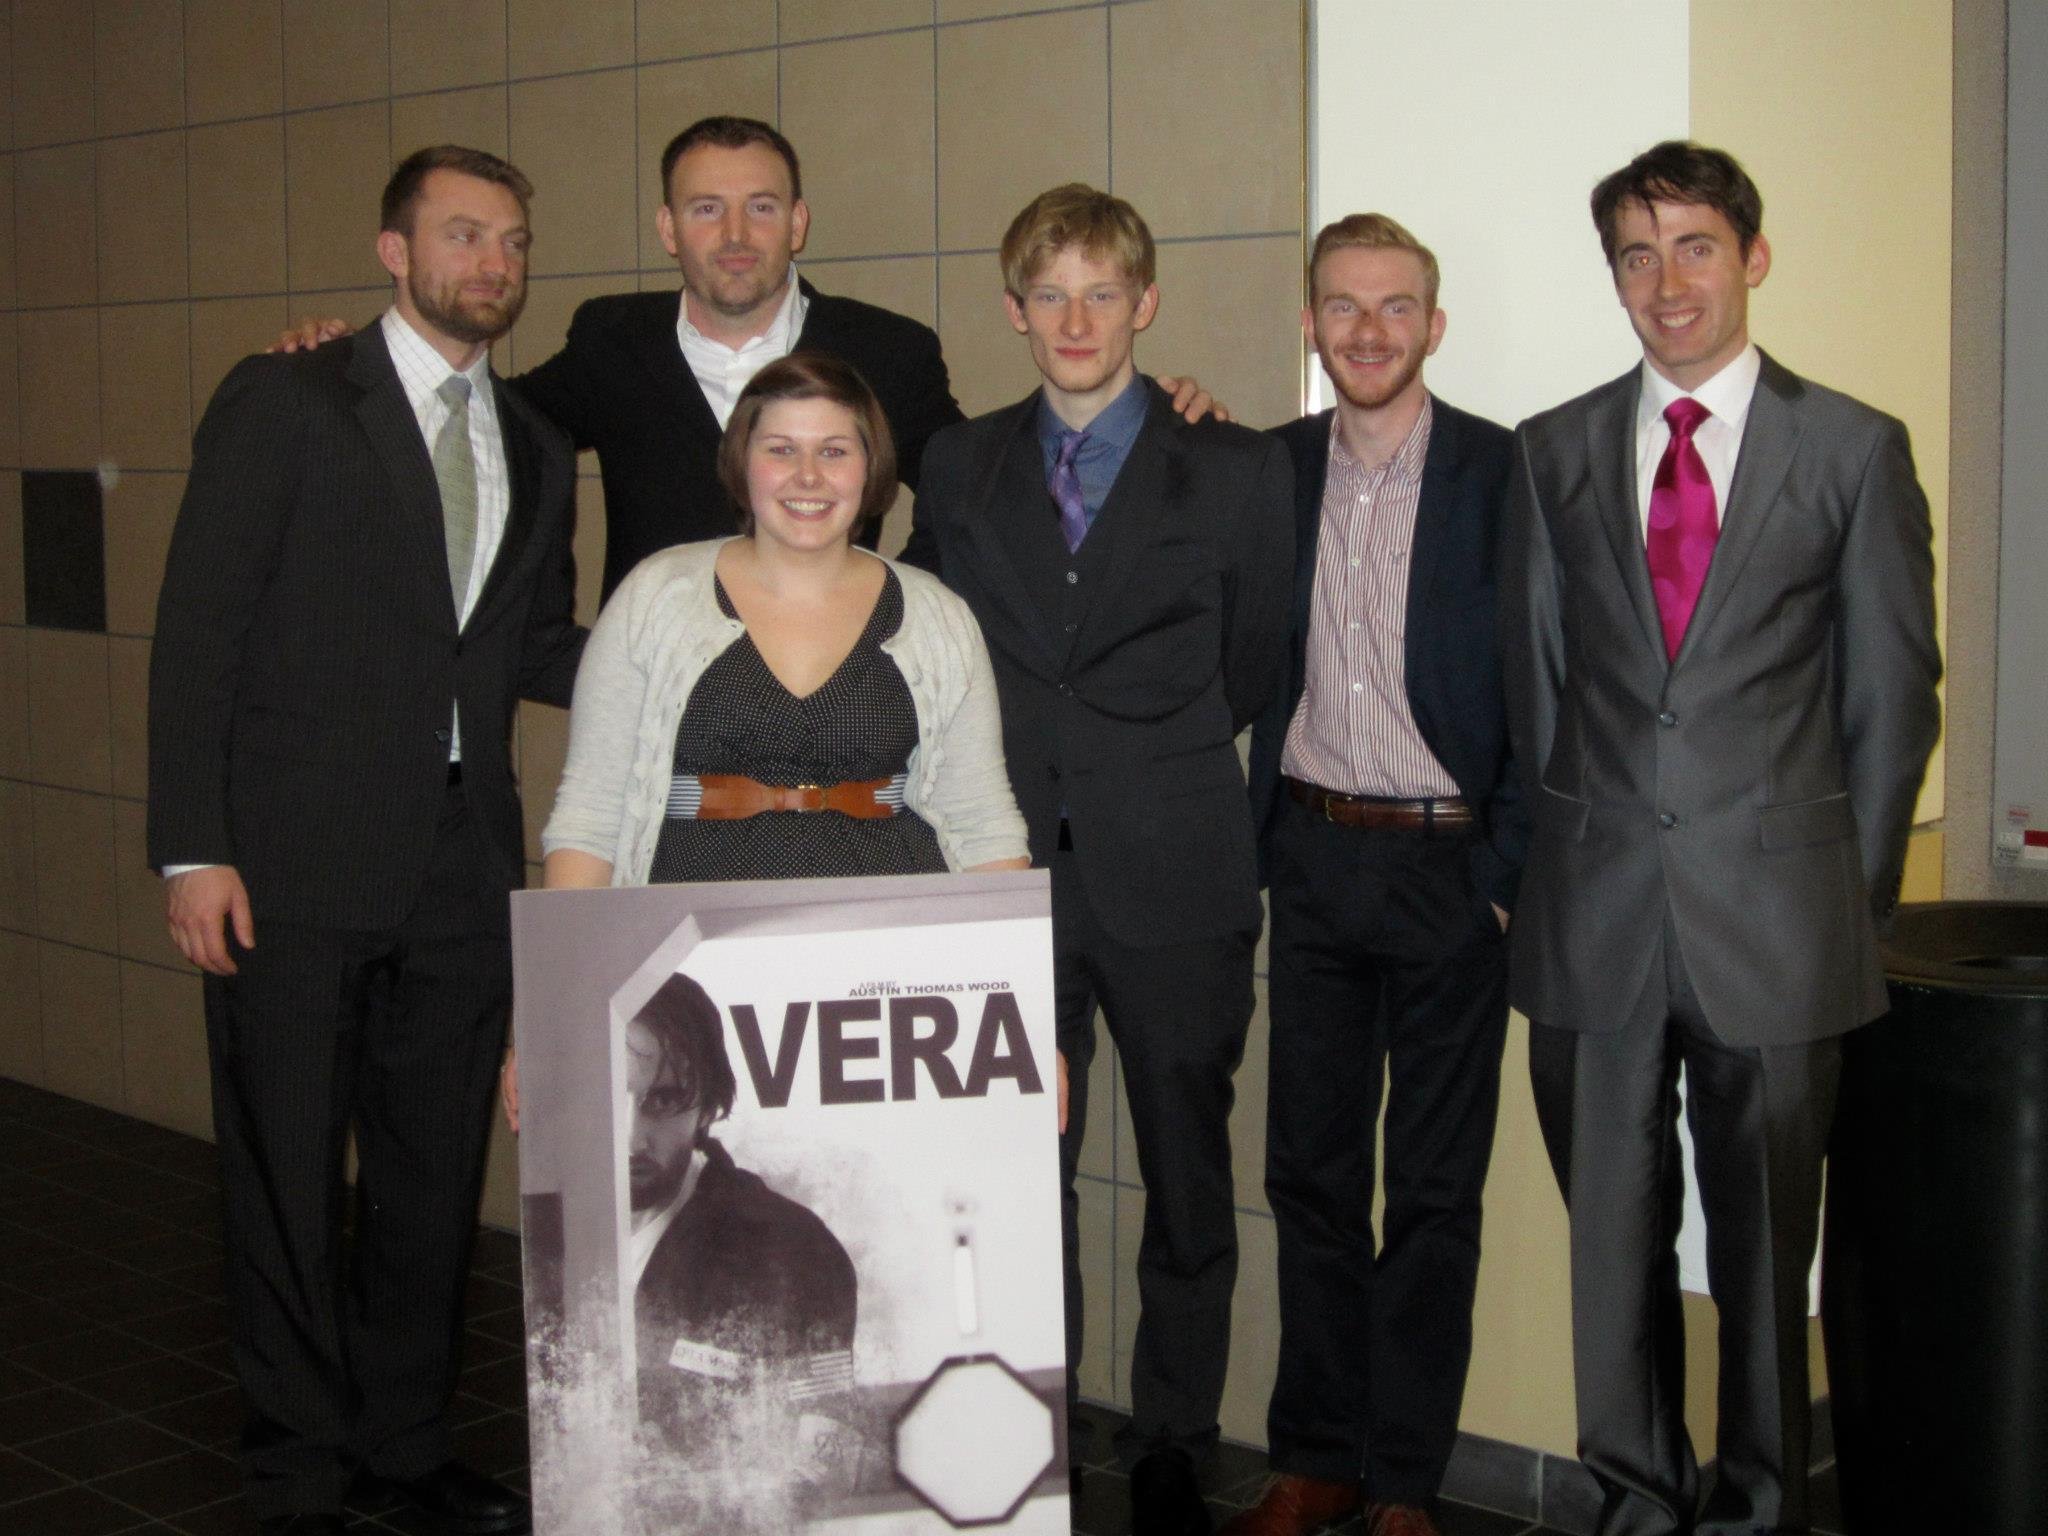 Aaron Mager, Jack Piatt, April Gray, Matthew Wozniak, Austin Thomas Wood and Robert Brettenaugh at event of Vera.